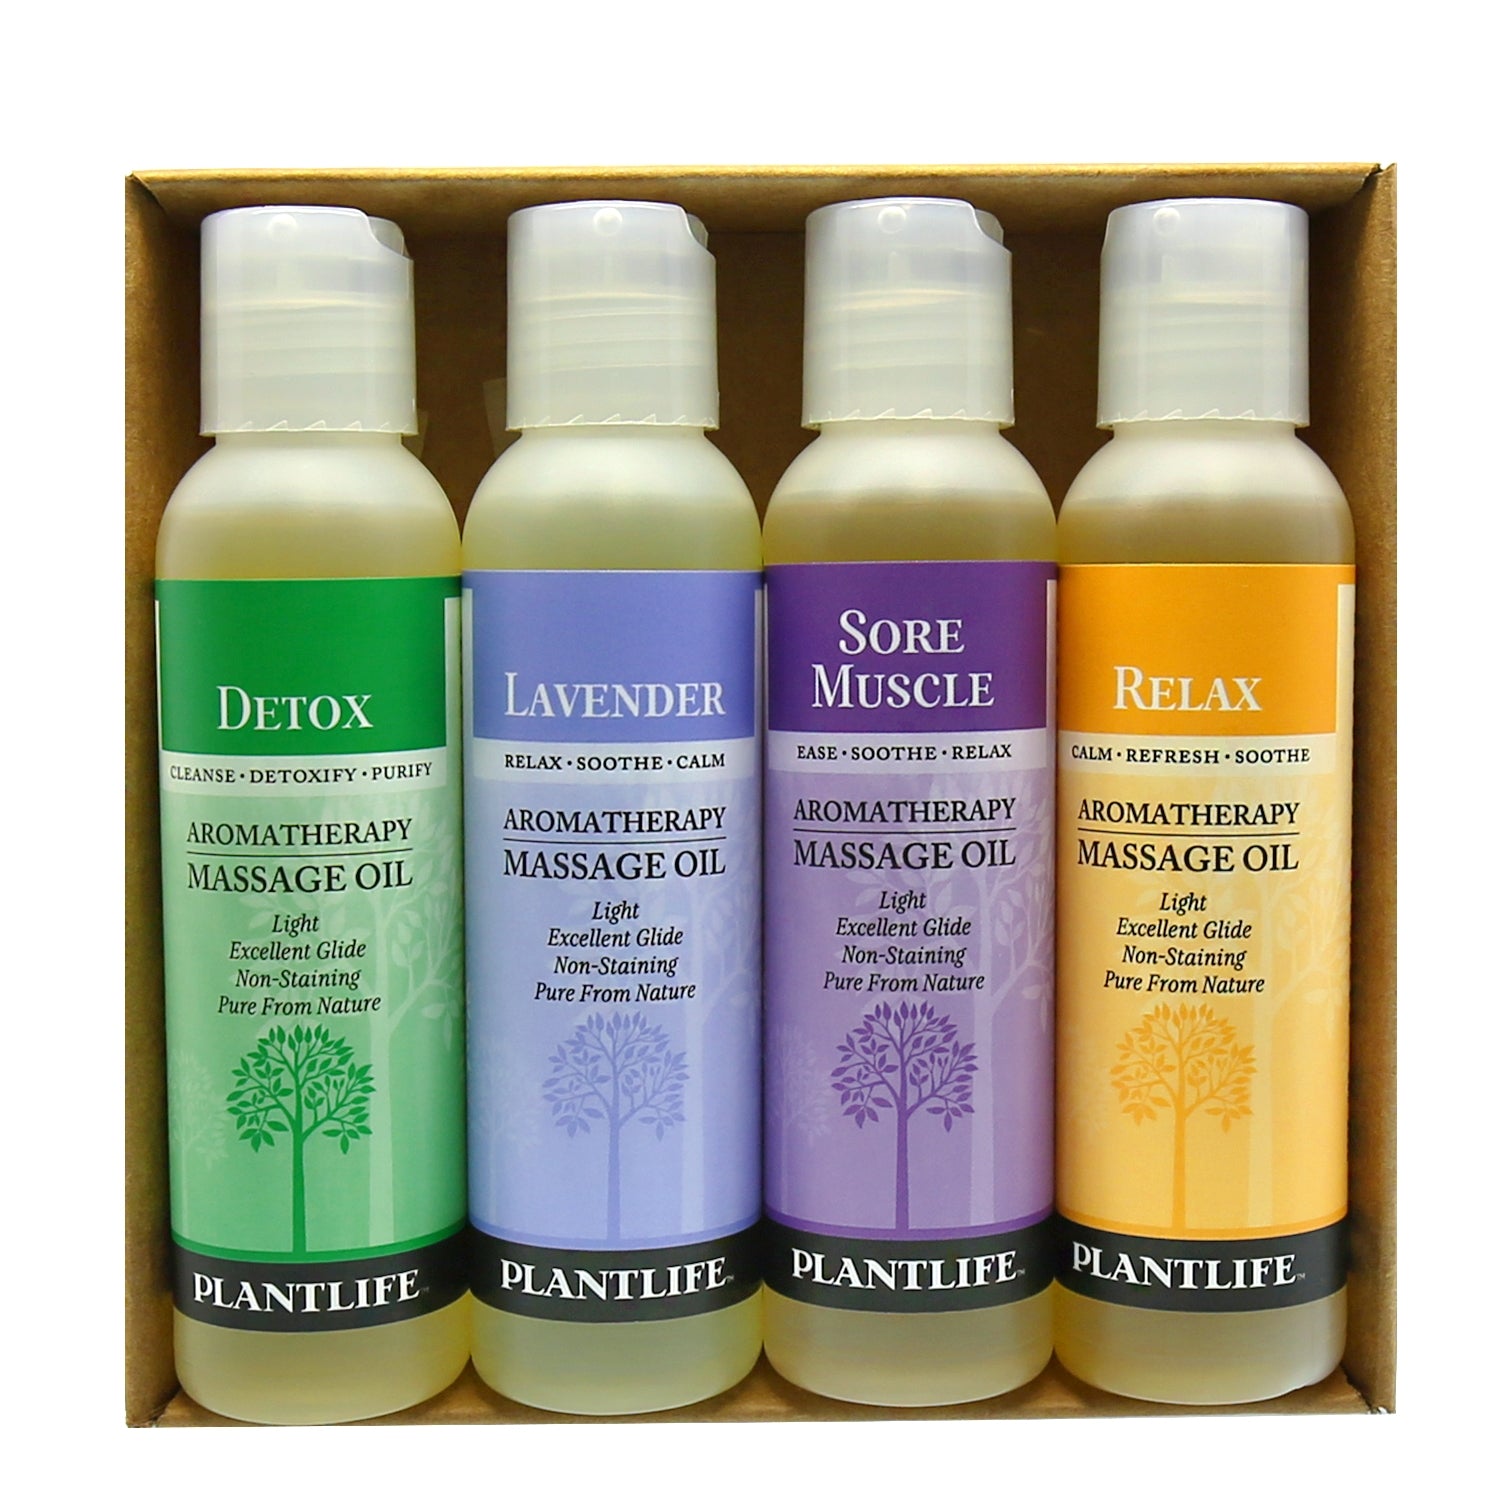 Massage Oil 4 Pack - Detox, Lavender, Relax, Sore Muscle